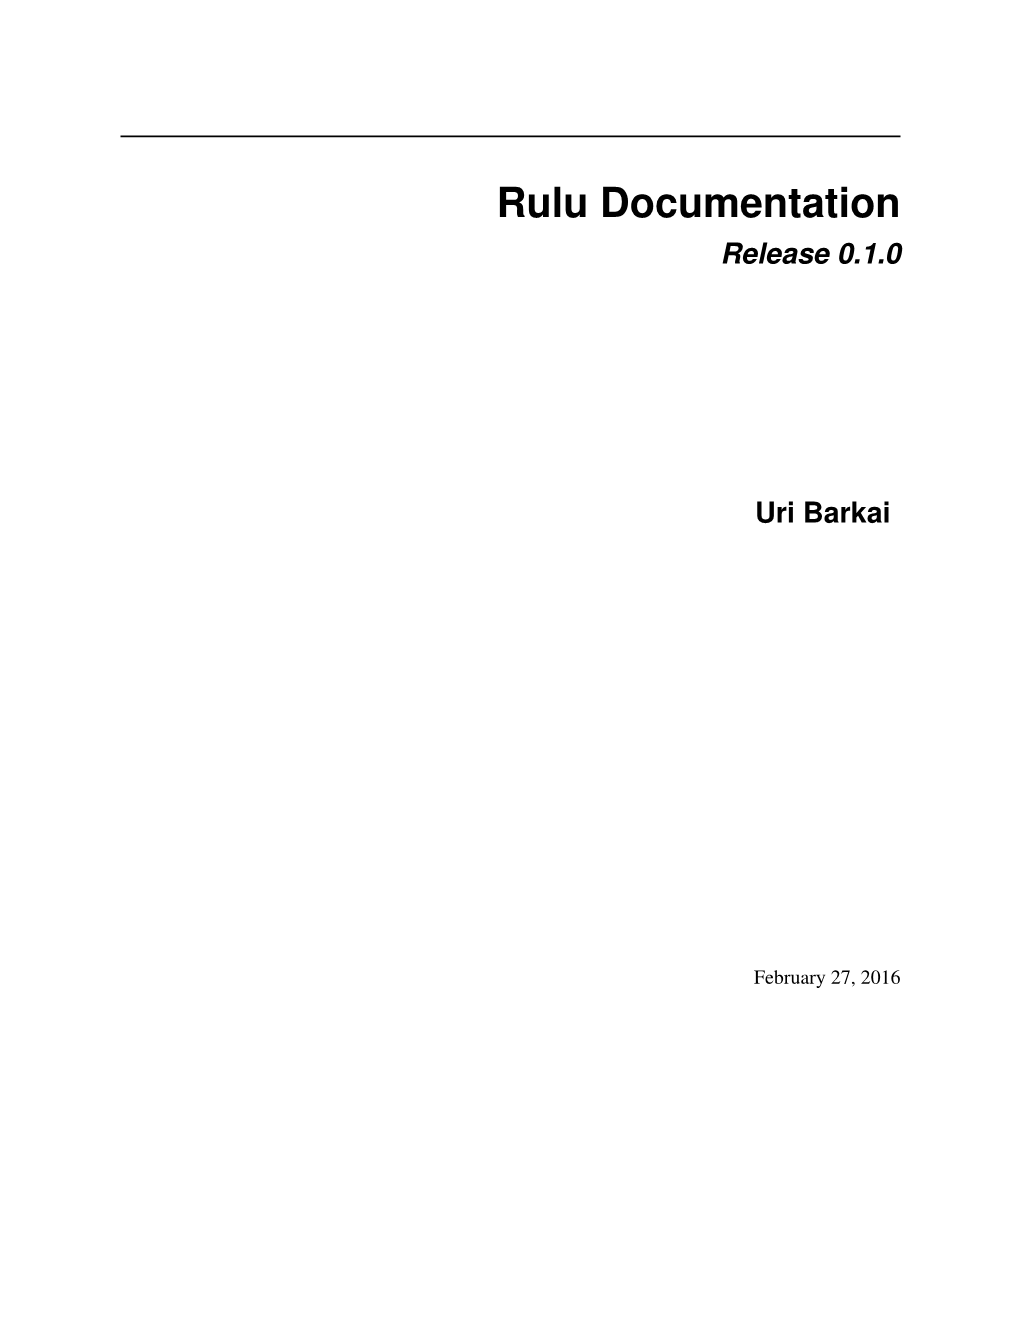 Rulu Documentation Release 0.1.0